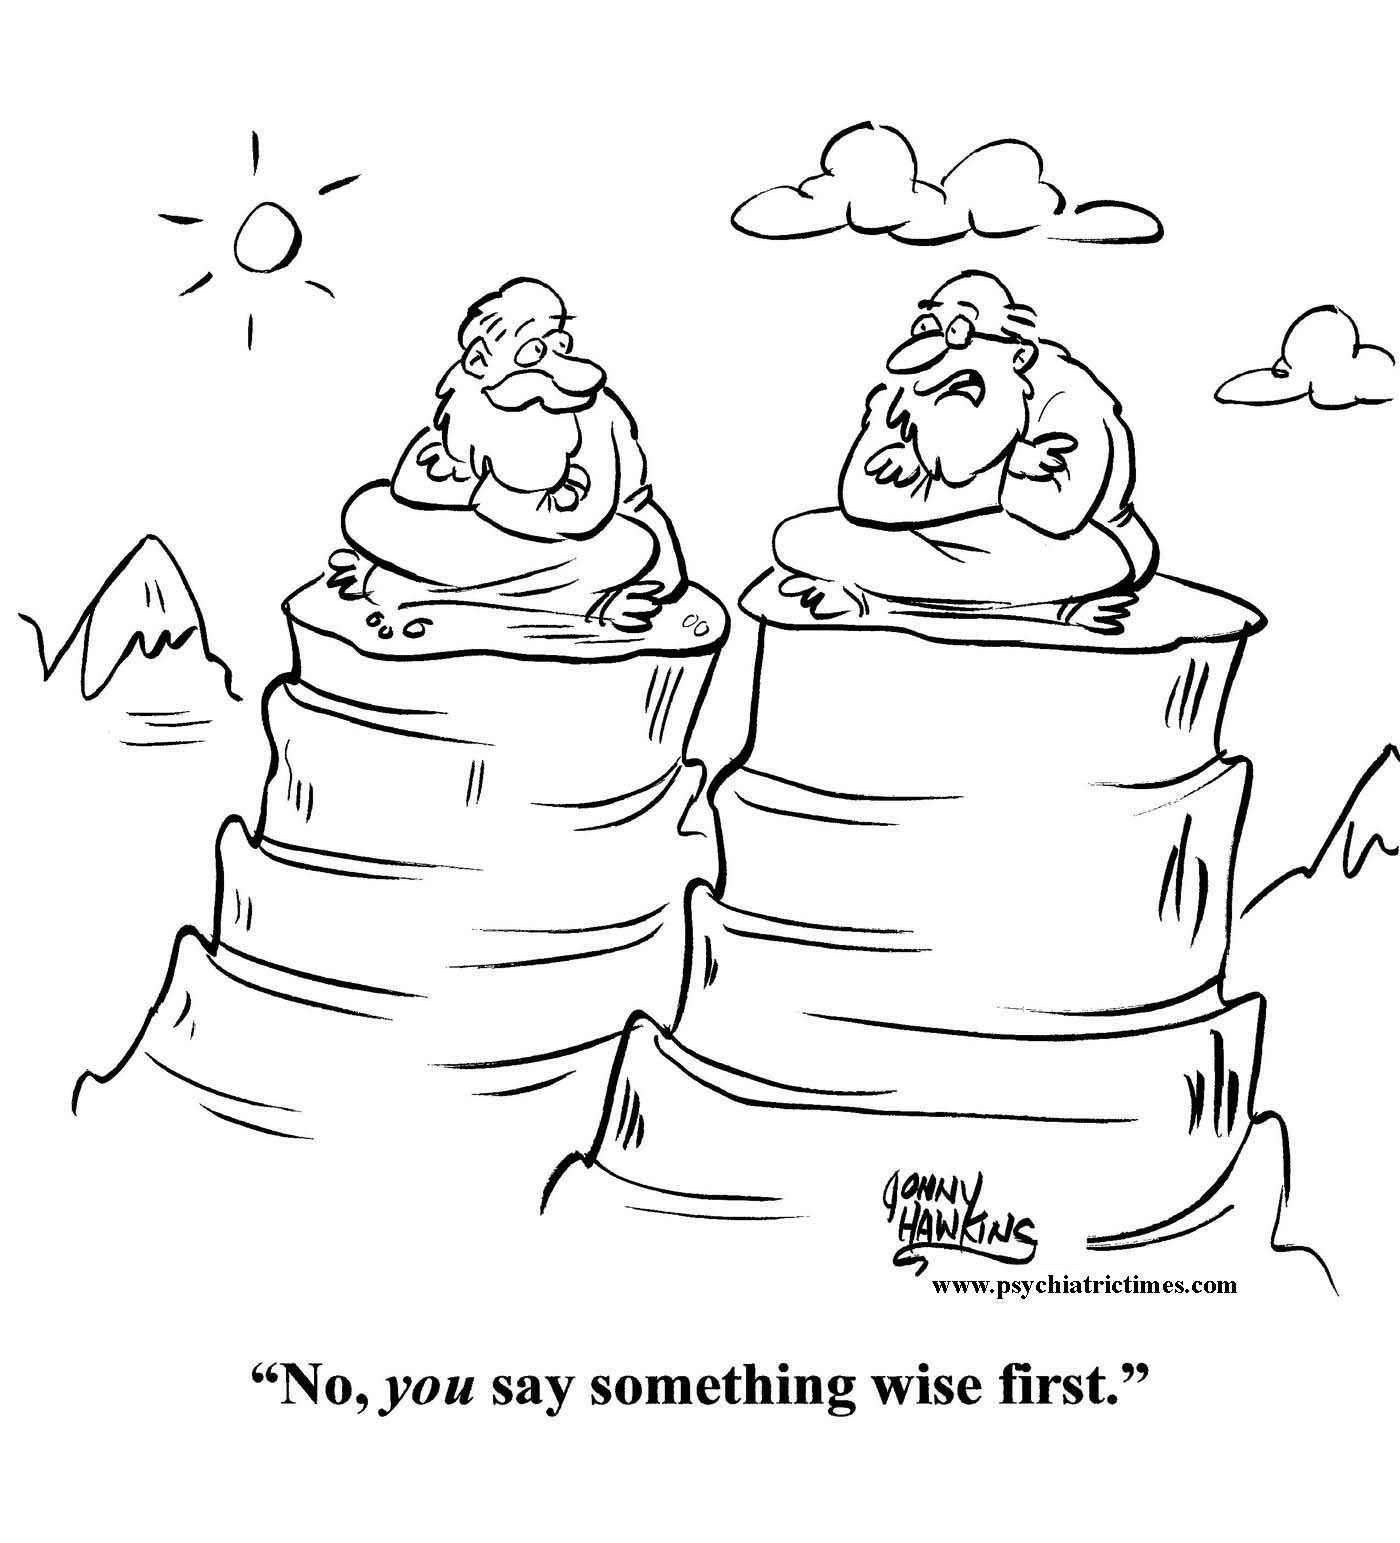 Psychiatry Comic: Wise Guys